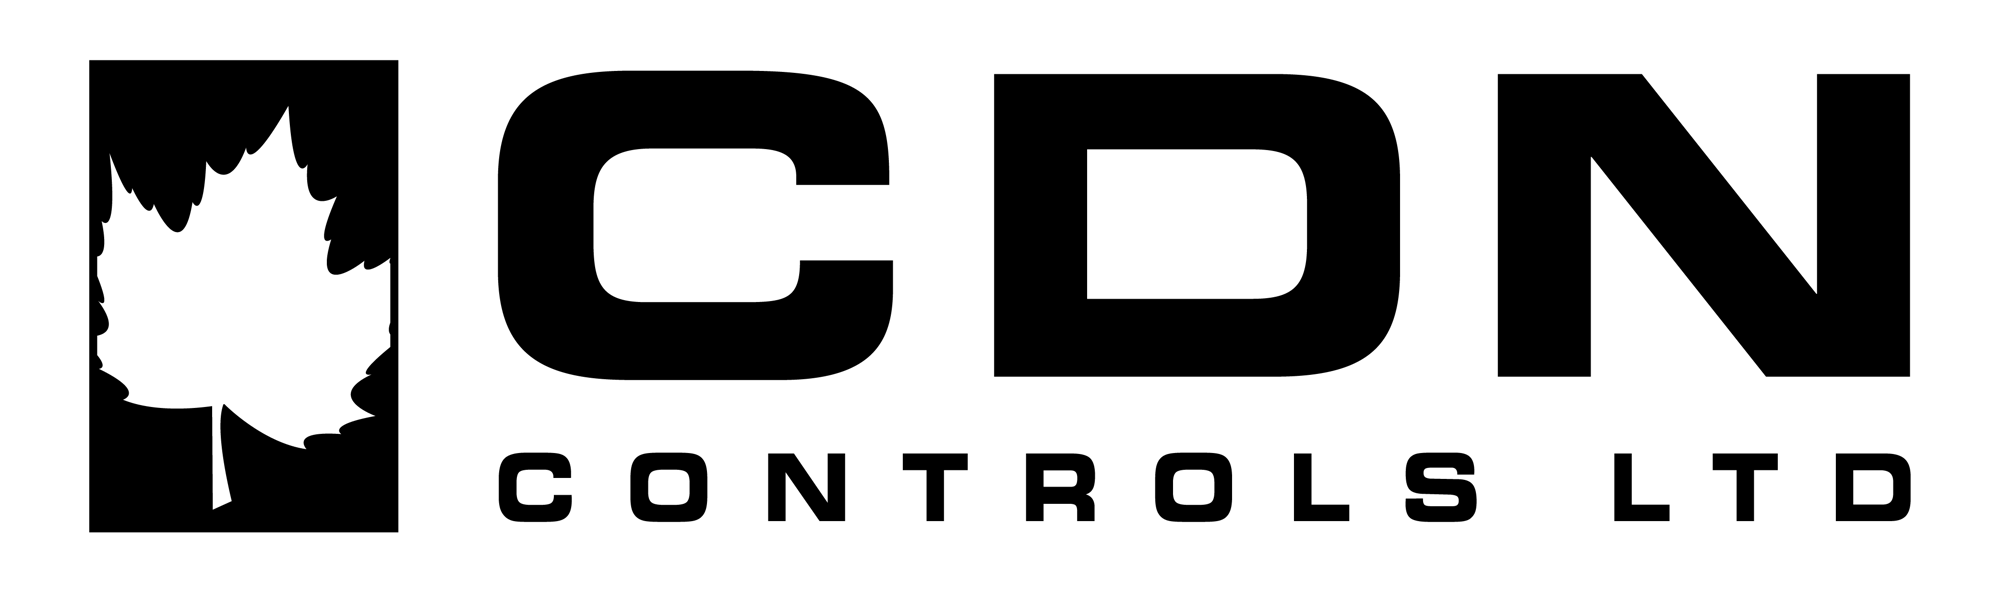 logo_cdn-controls-ltd_logo-only-all-black-01